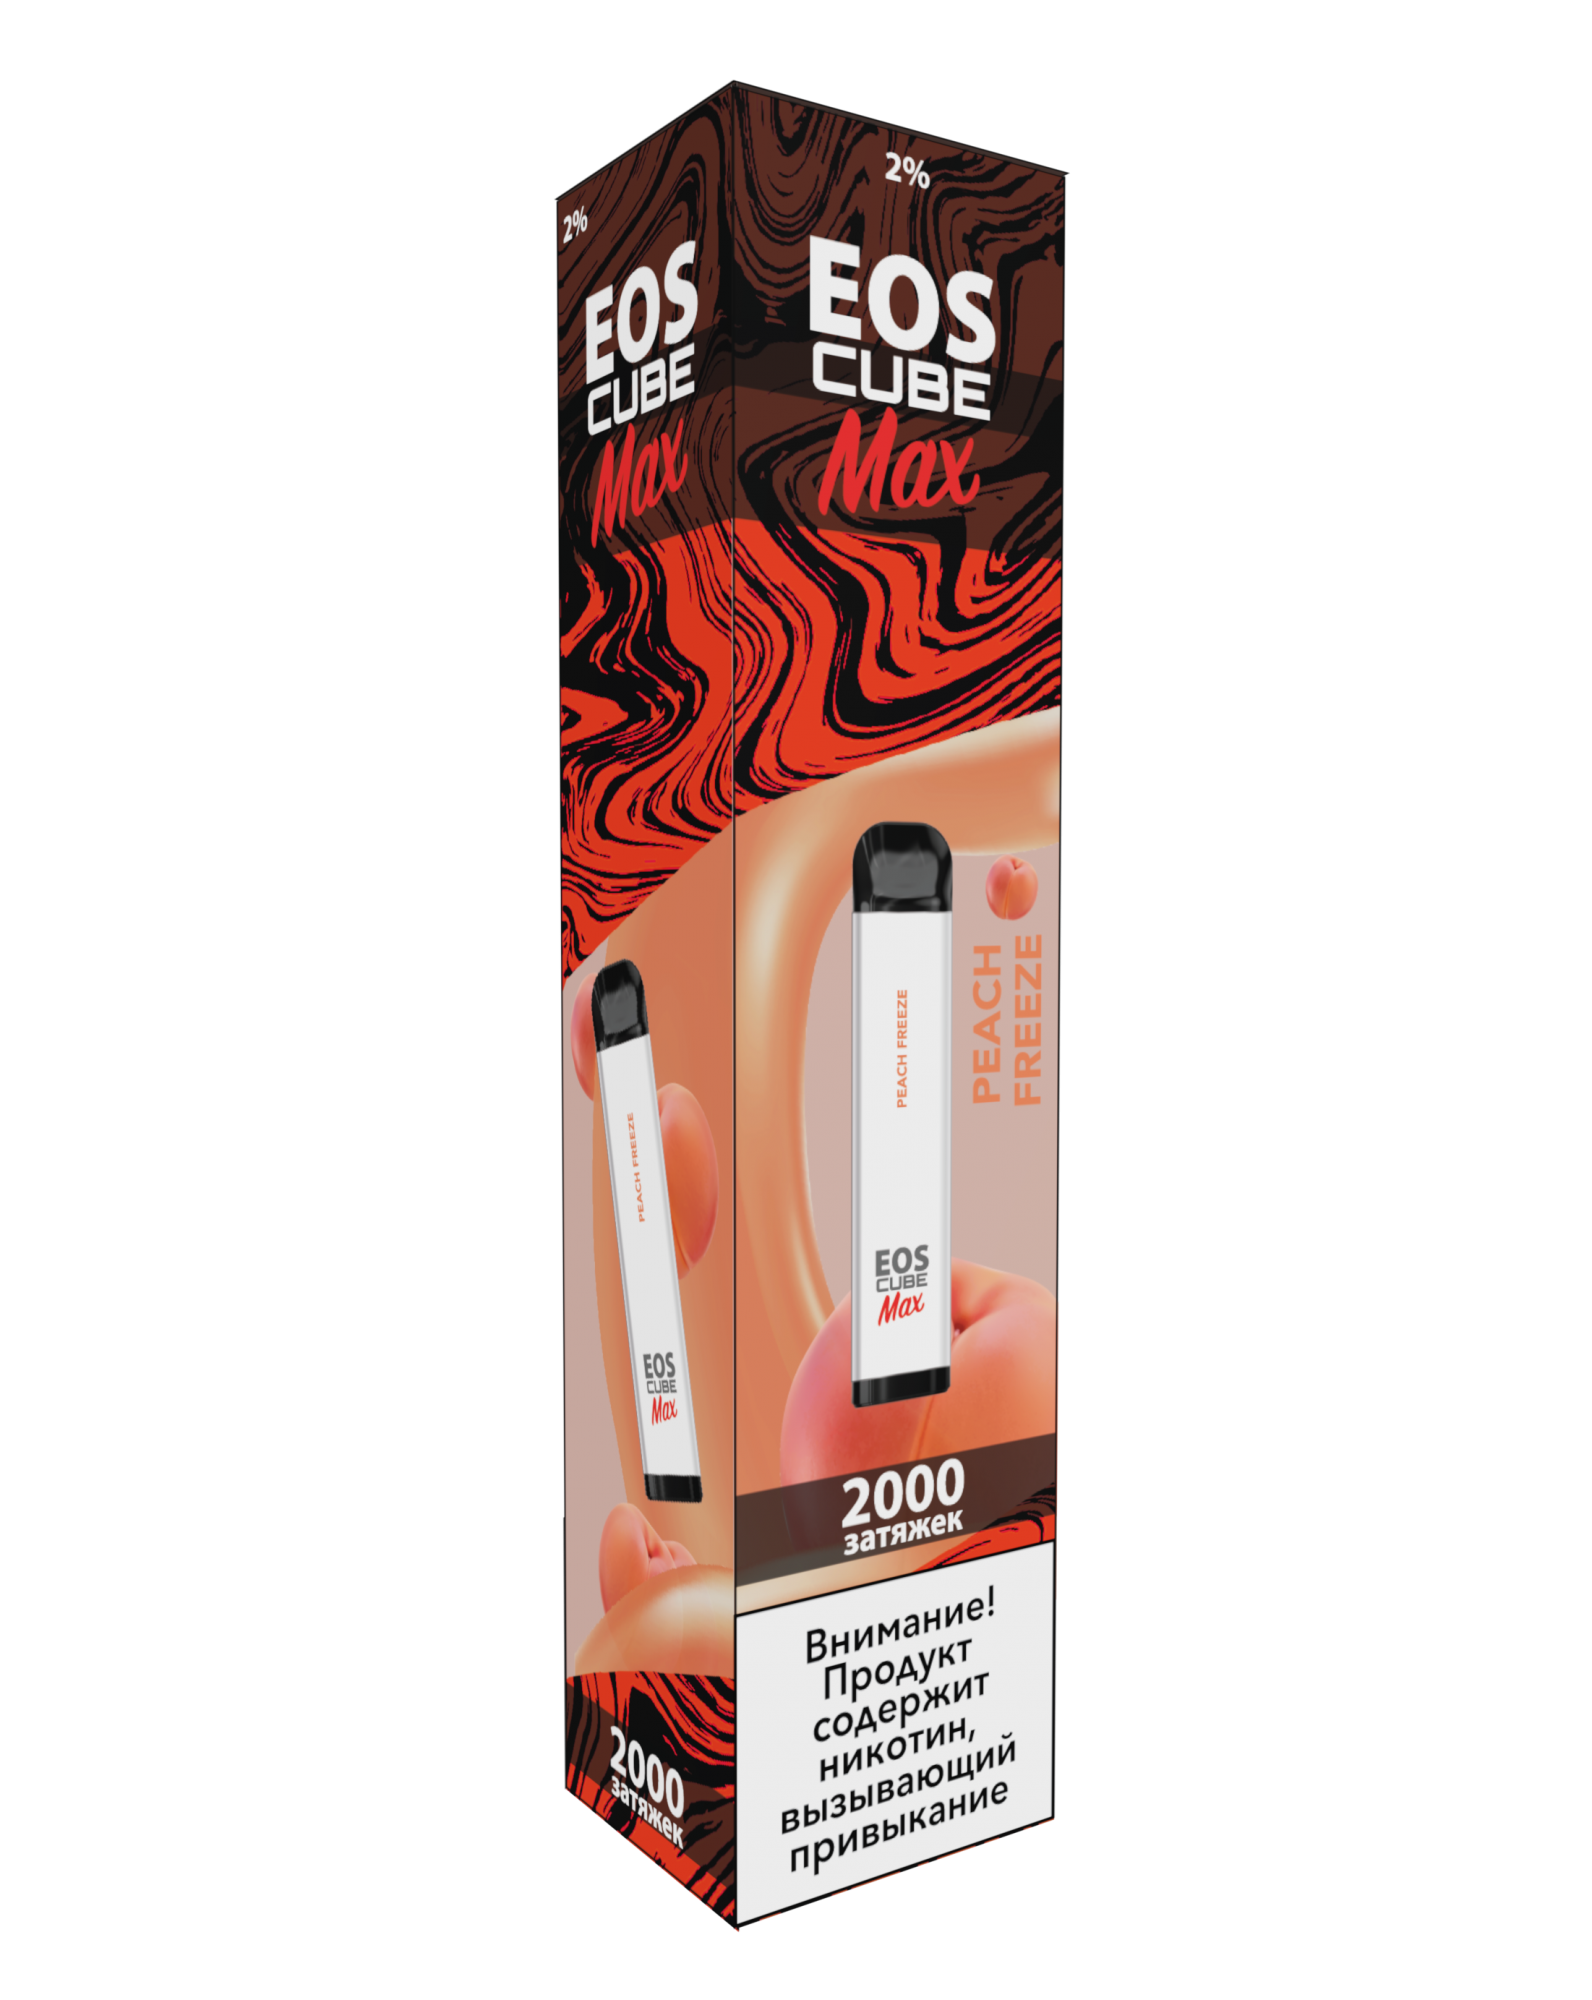 EOS Cube Max 2000. EOS электронная сигарета одноразовая. Вейп EOS Cube Max. Одноразовая ЭС EOS Cube Max 2000. Cube max